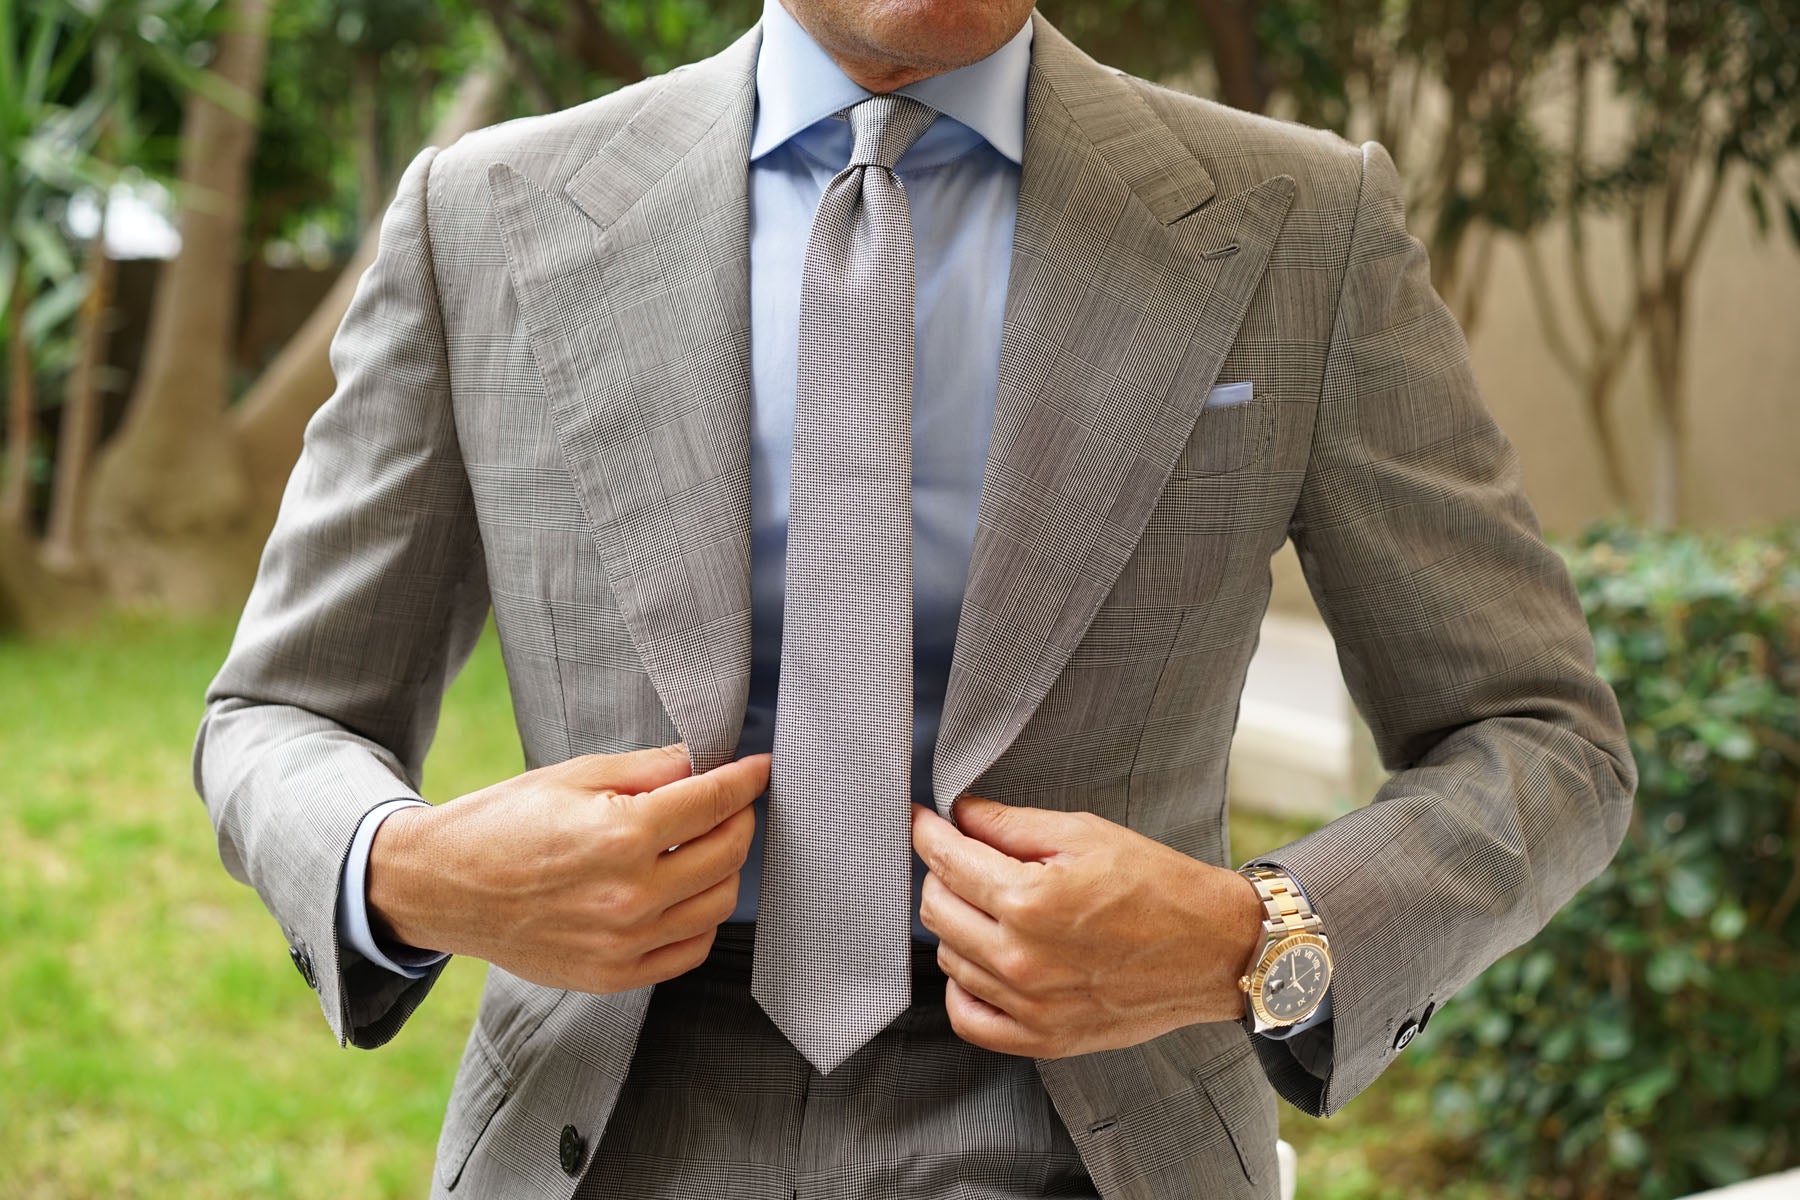 Black and White Small Dots Skinny Tie | Men's Designer Thin Slim Ties ...